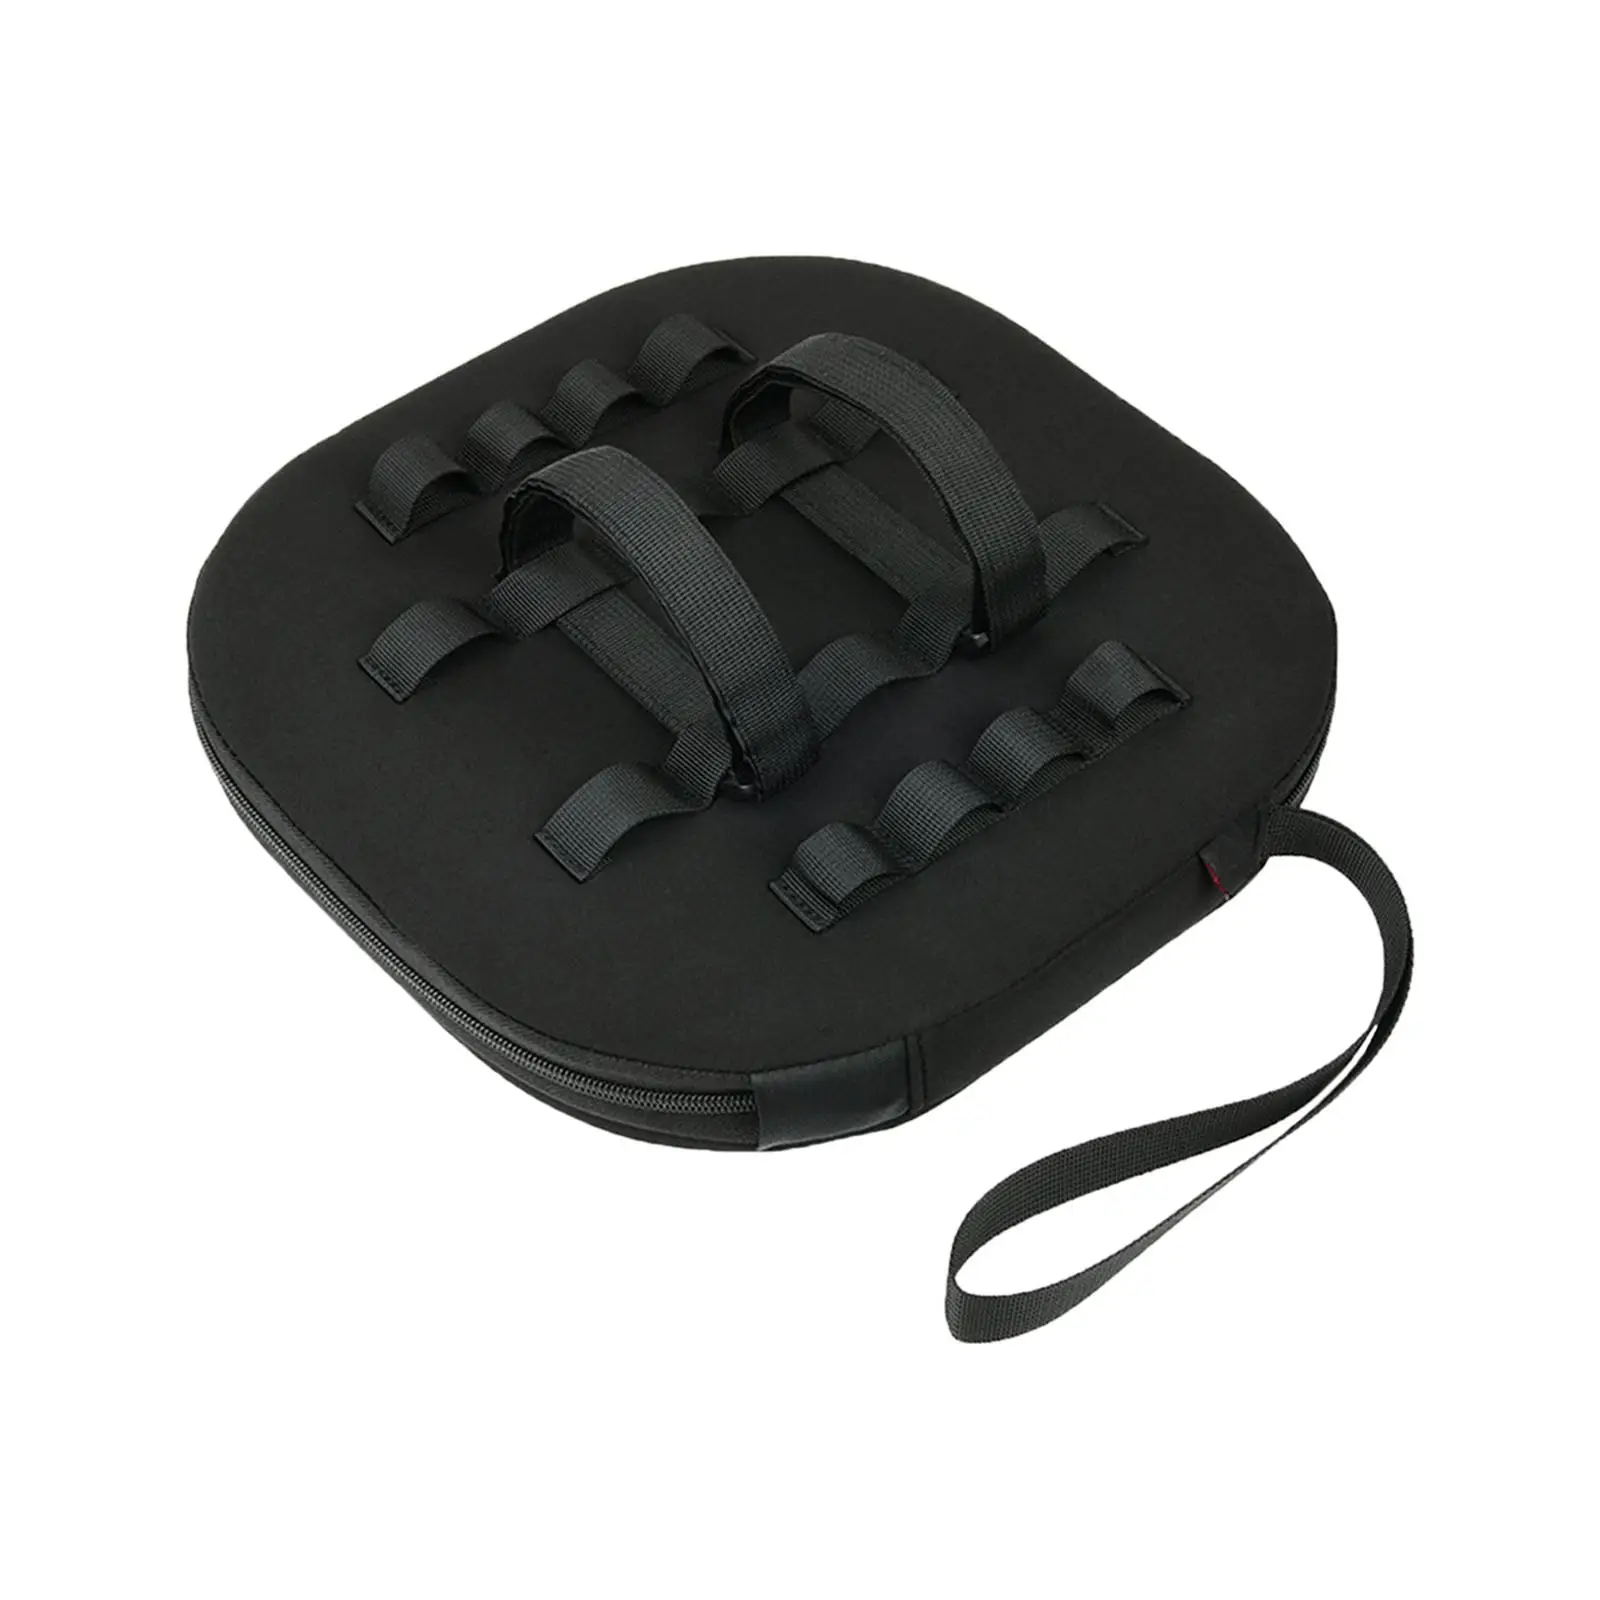 Floating Phone Holder Accessories Serving Tray Hot Tub Pool Speaker Float